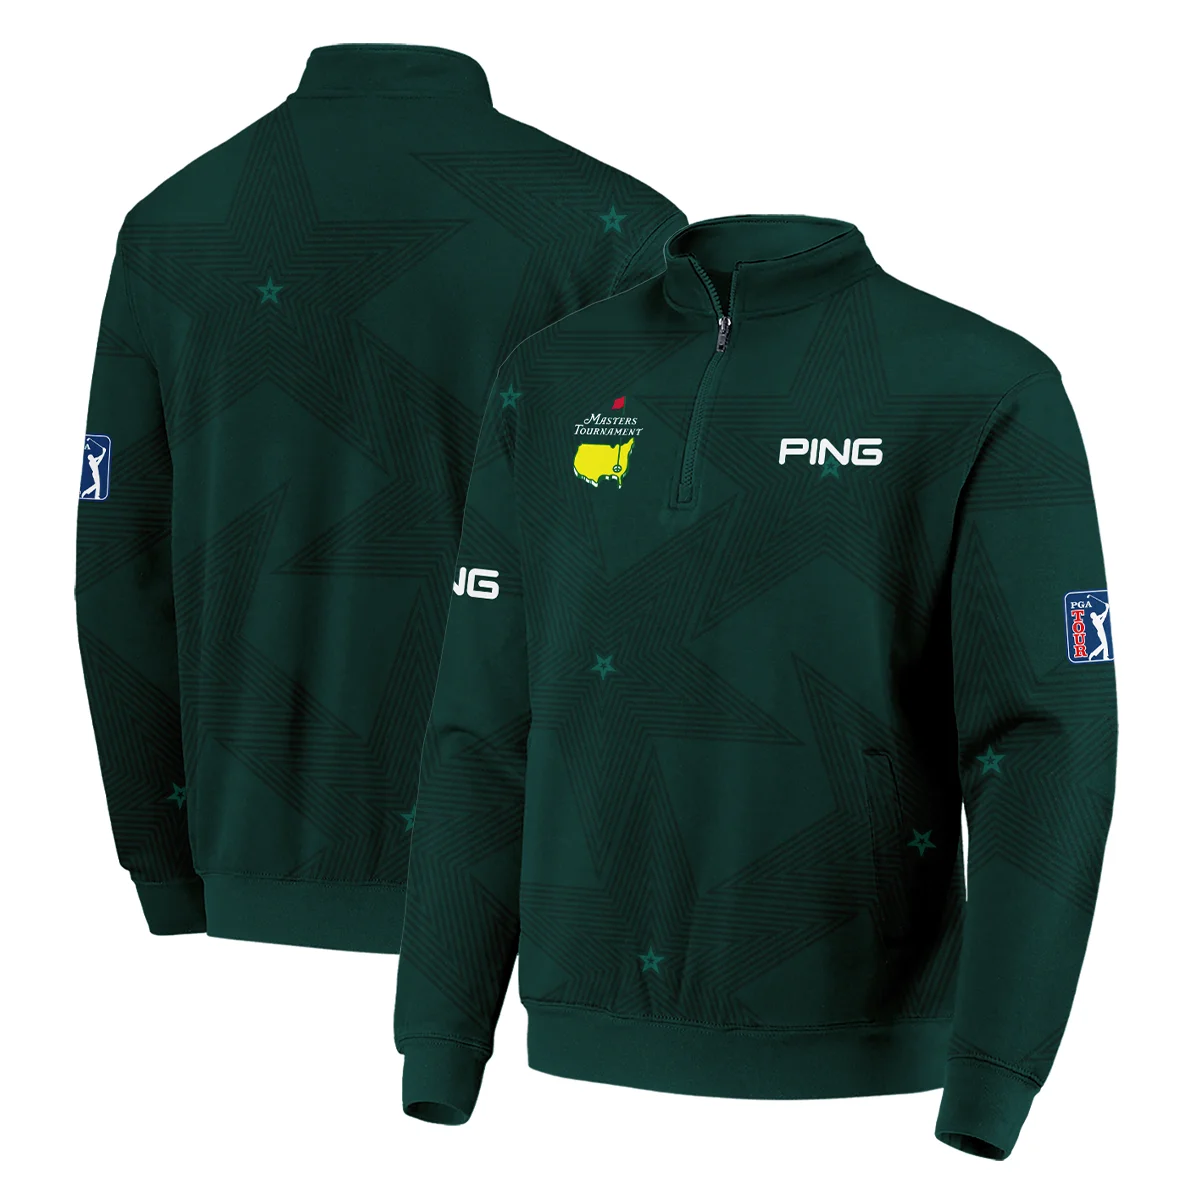 Golf Sport Masters Tournament Ping Stand Colar Jacket Sports Star Sripe Dark Green Stand Colar Jacket